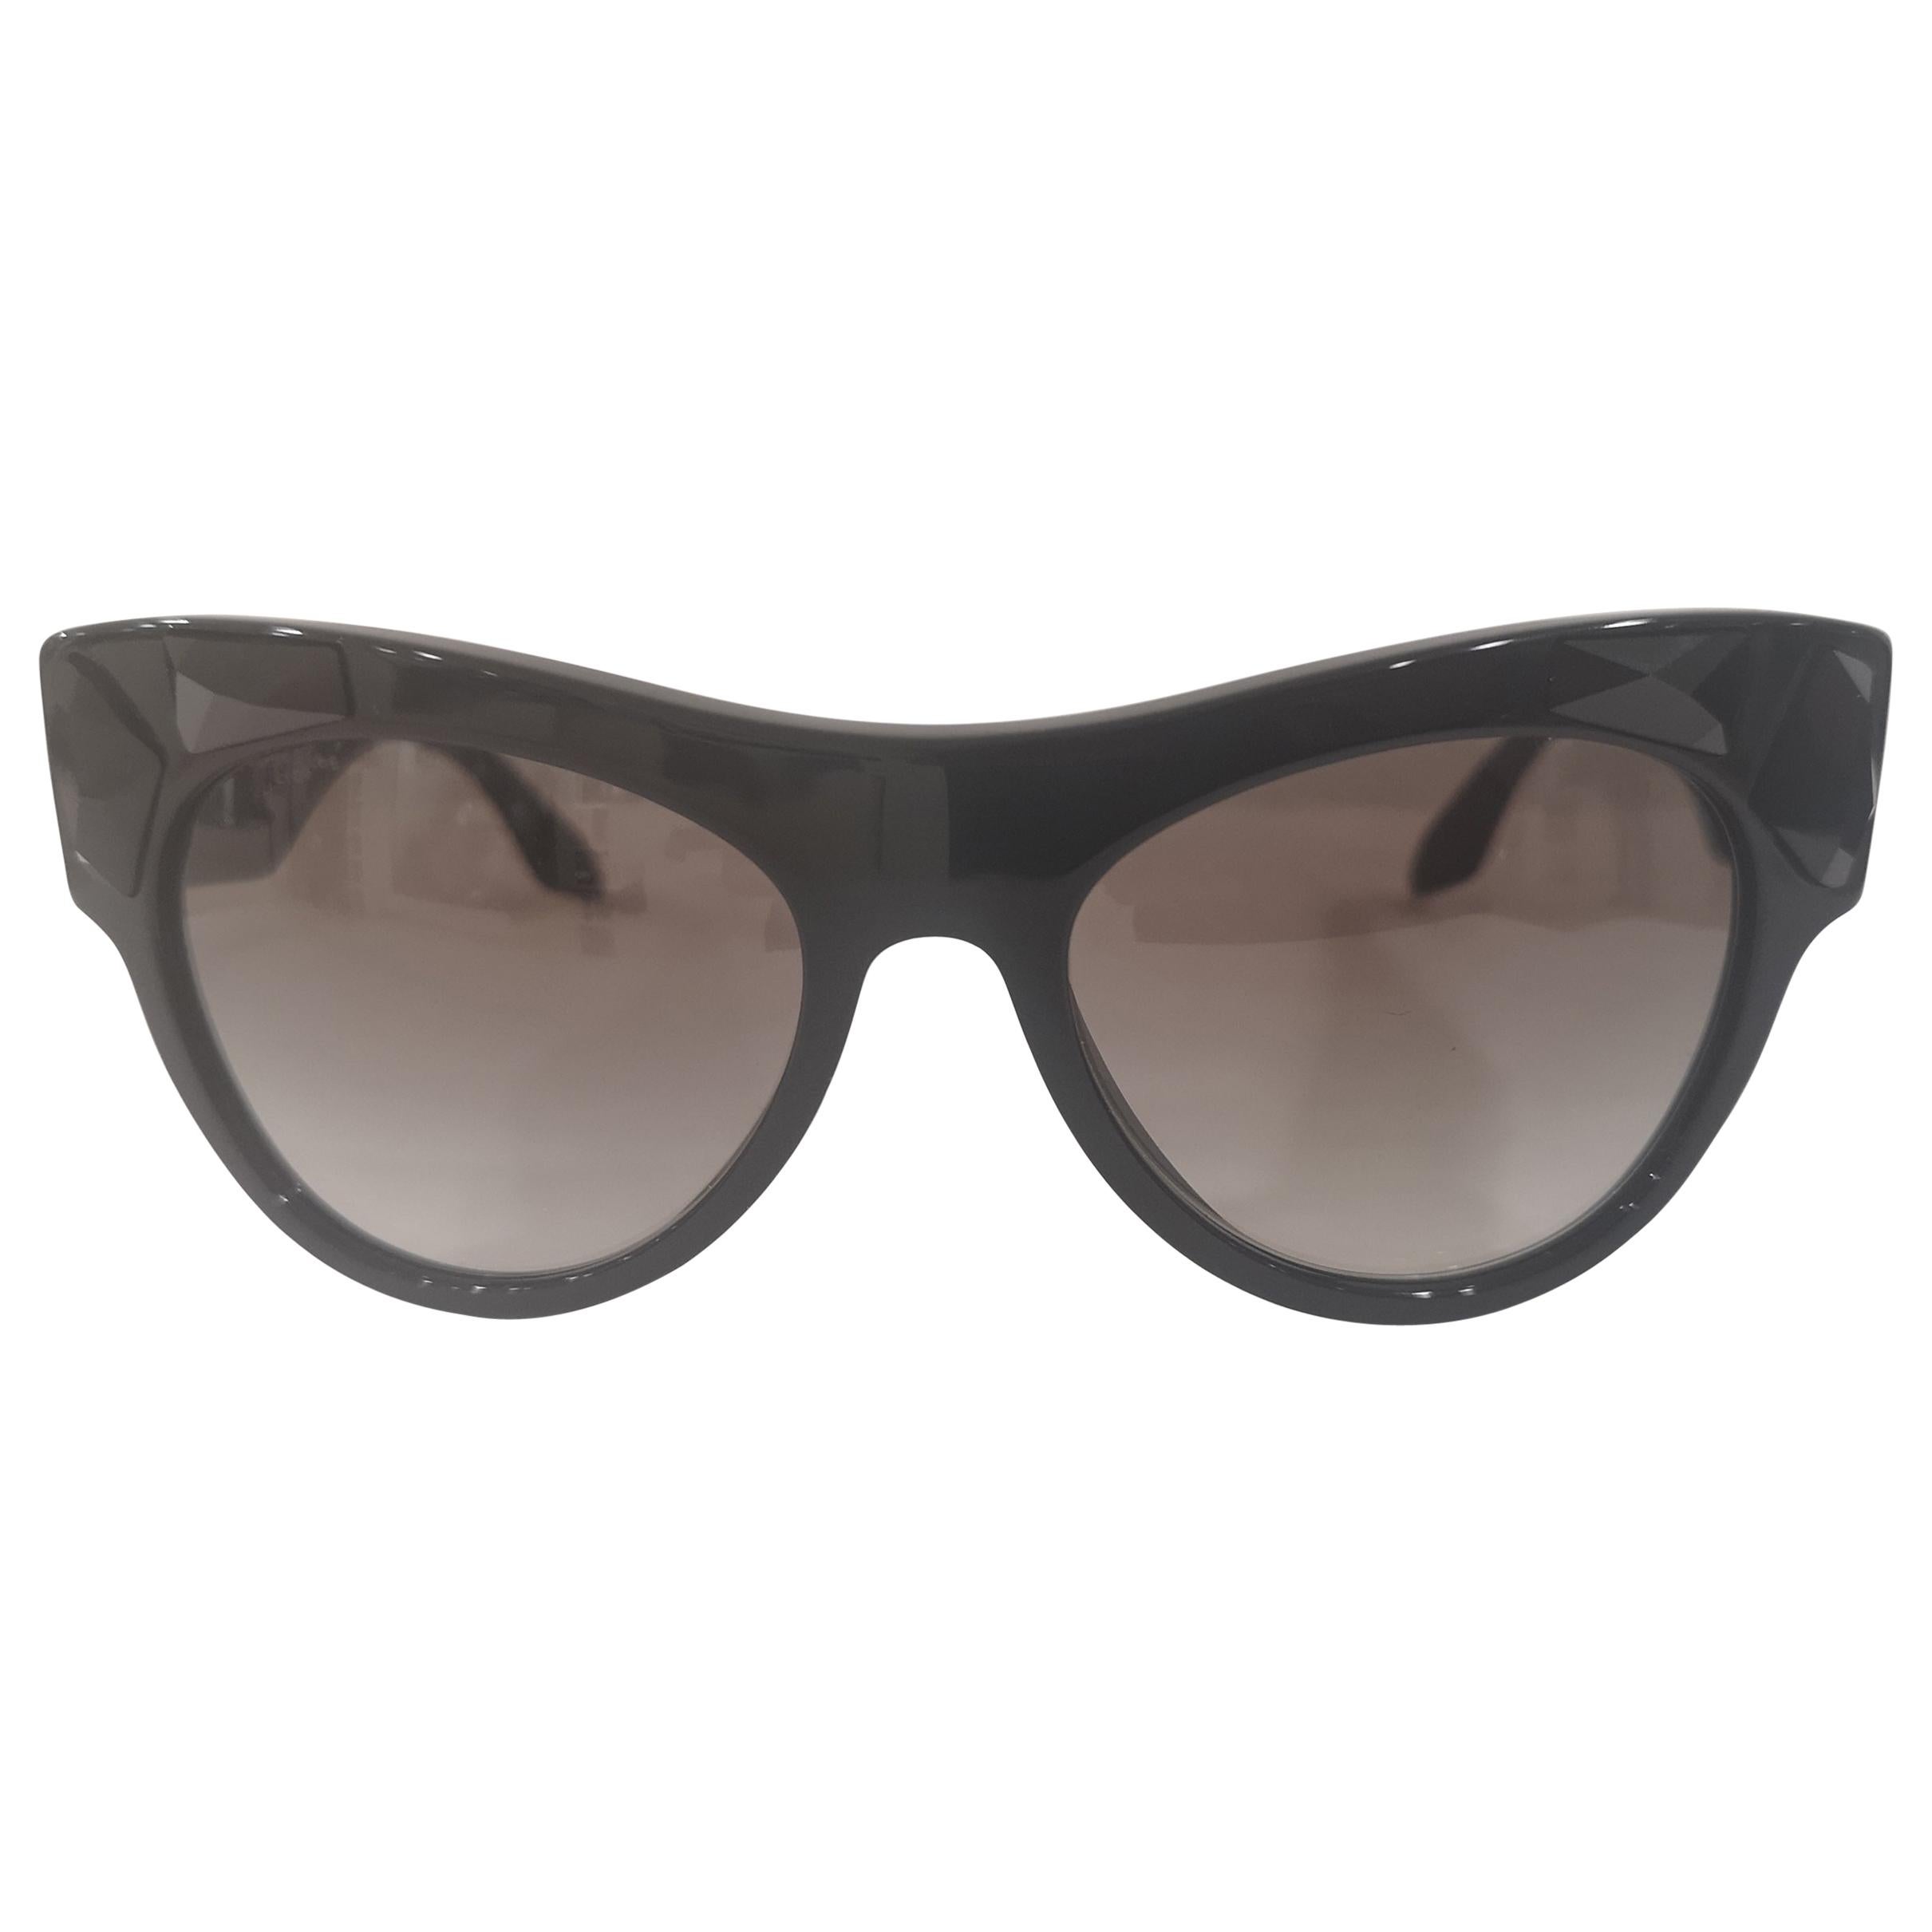 PRADA BLACK Diva Sunglasses mod. SPR 230 56/20 140 2N w/CASE and BOX